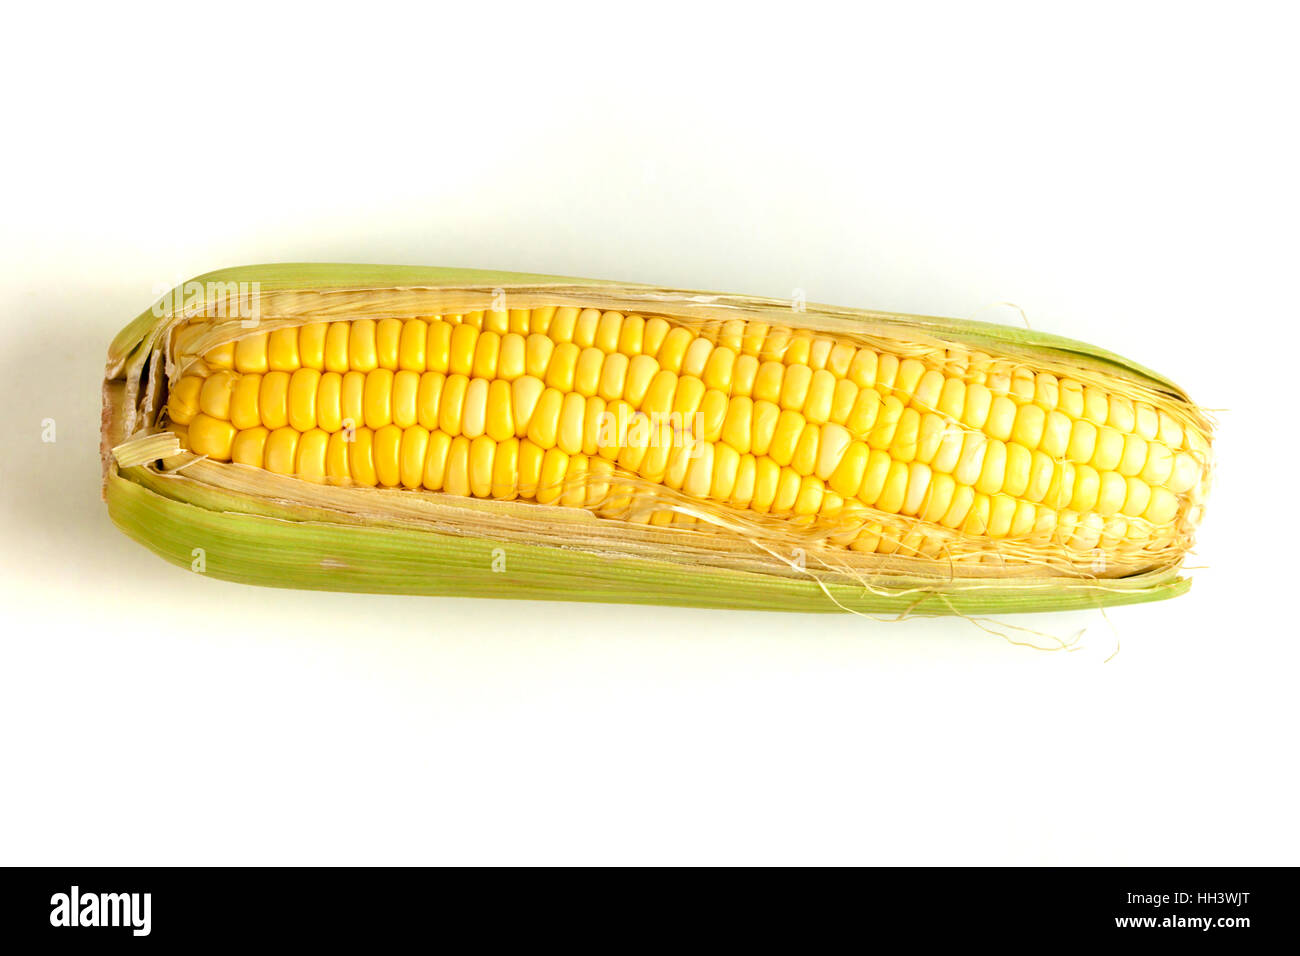 Boil sweet corn on cobs kernels or fresh grains of ripe corn on white background Stock Photo